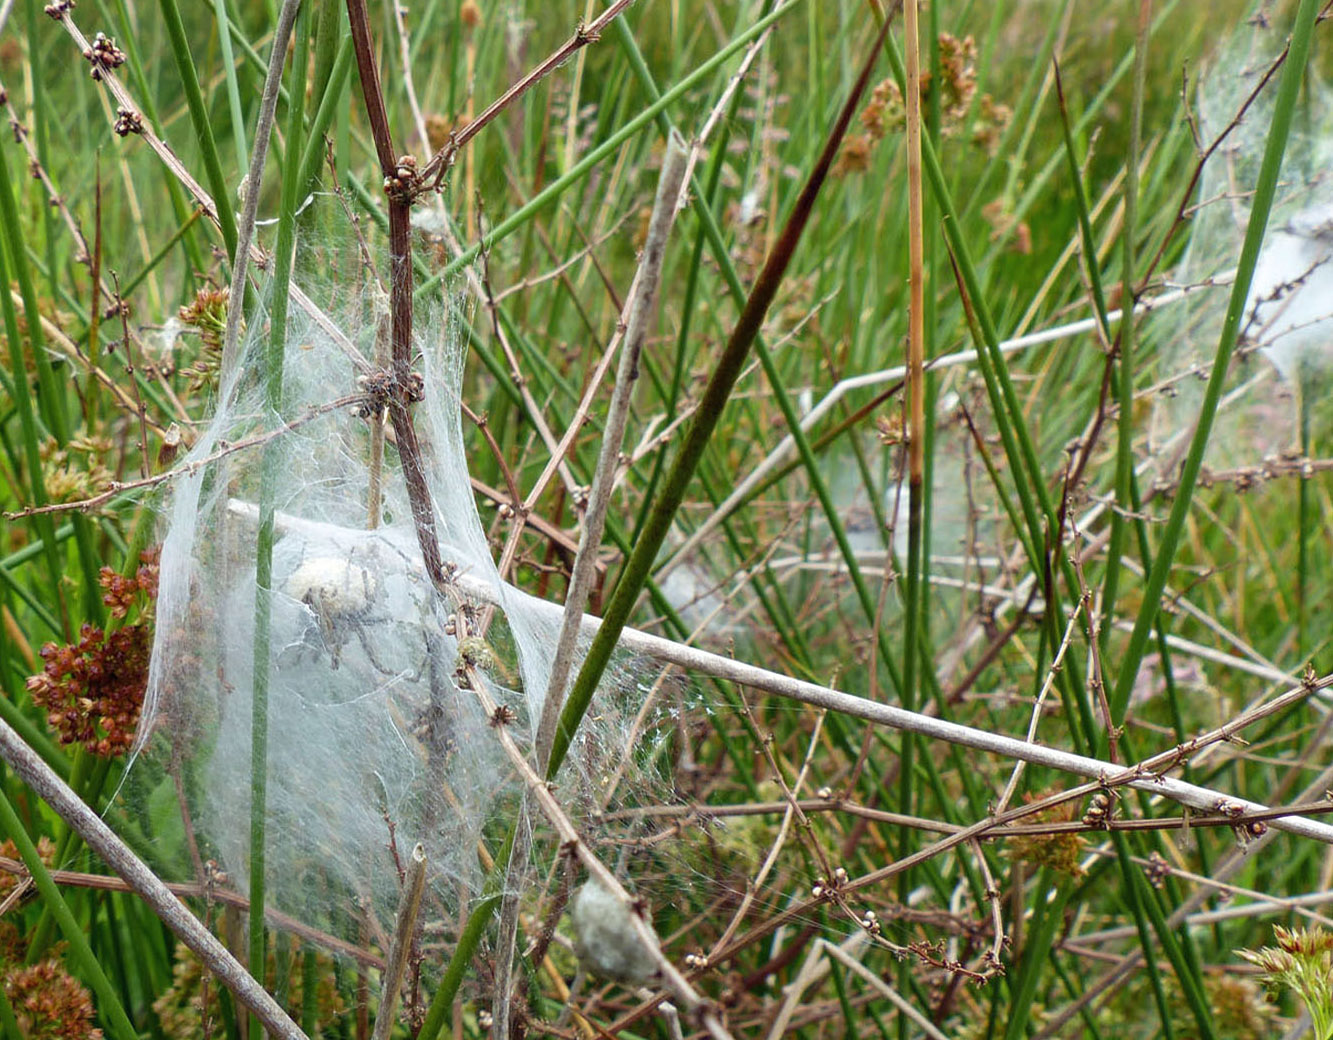 Female Pisaura mirabilis holding her egg sac within her tent-like nursery web